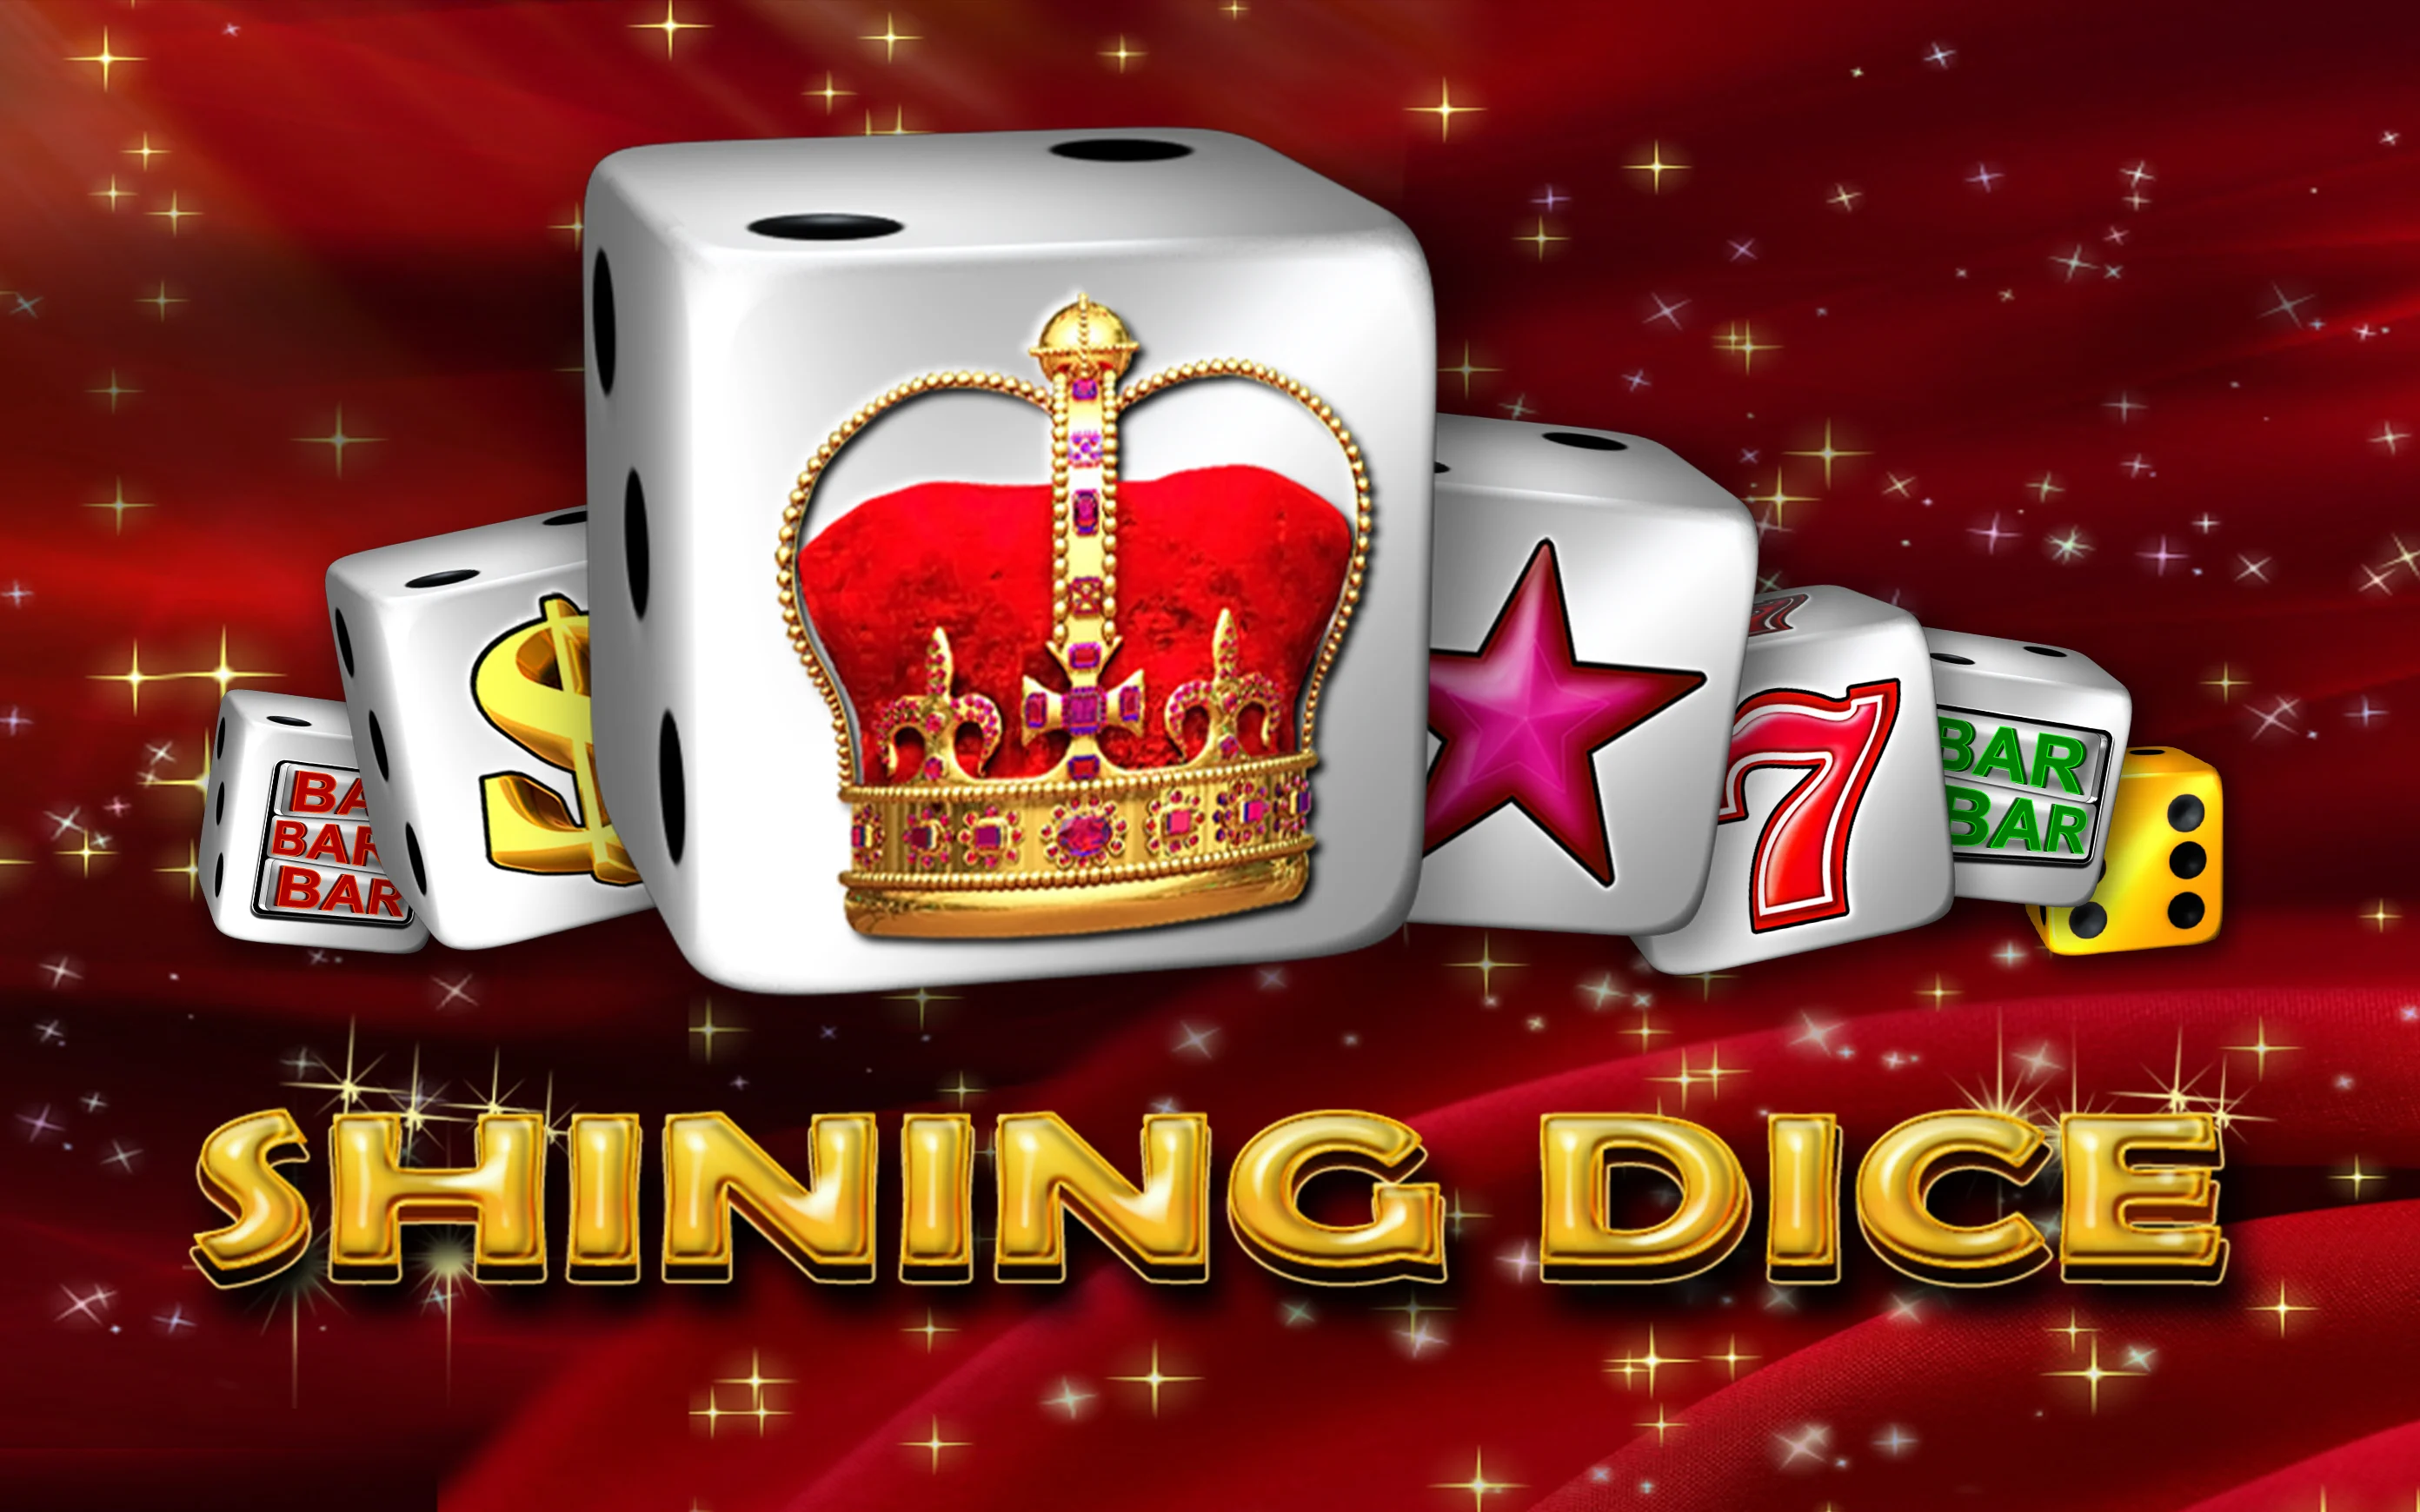 Play Shining Dice on Starcasino.be online casino